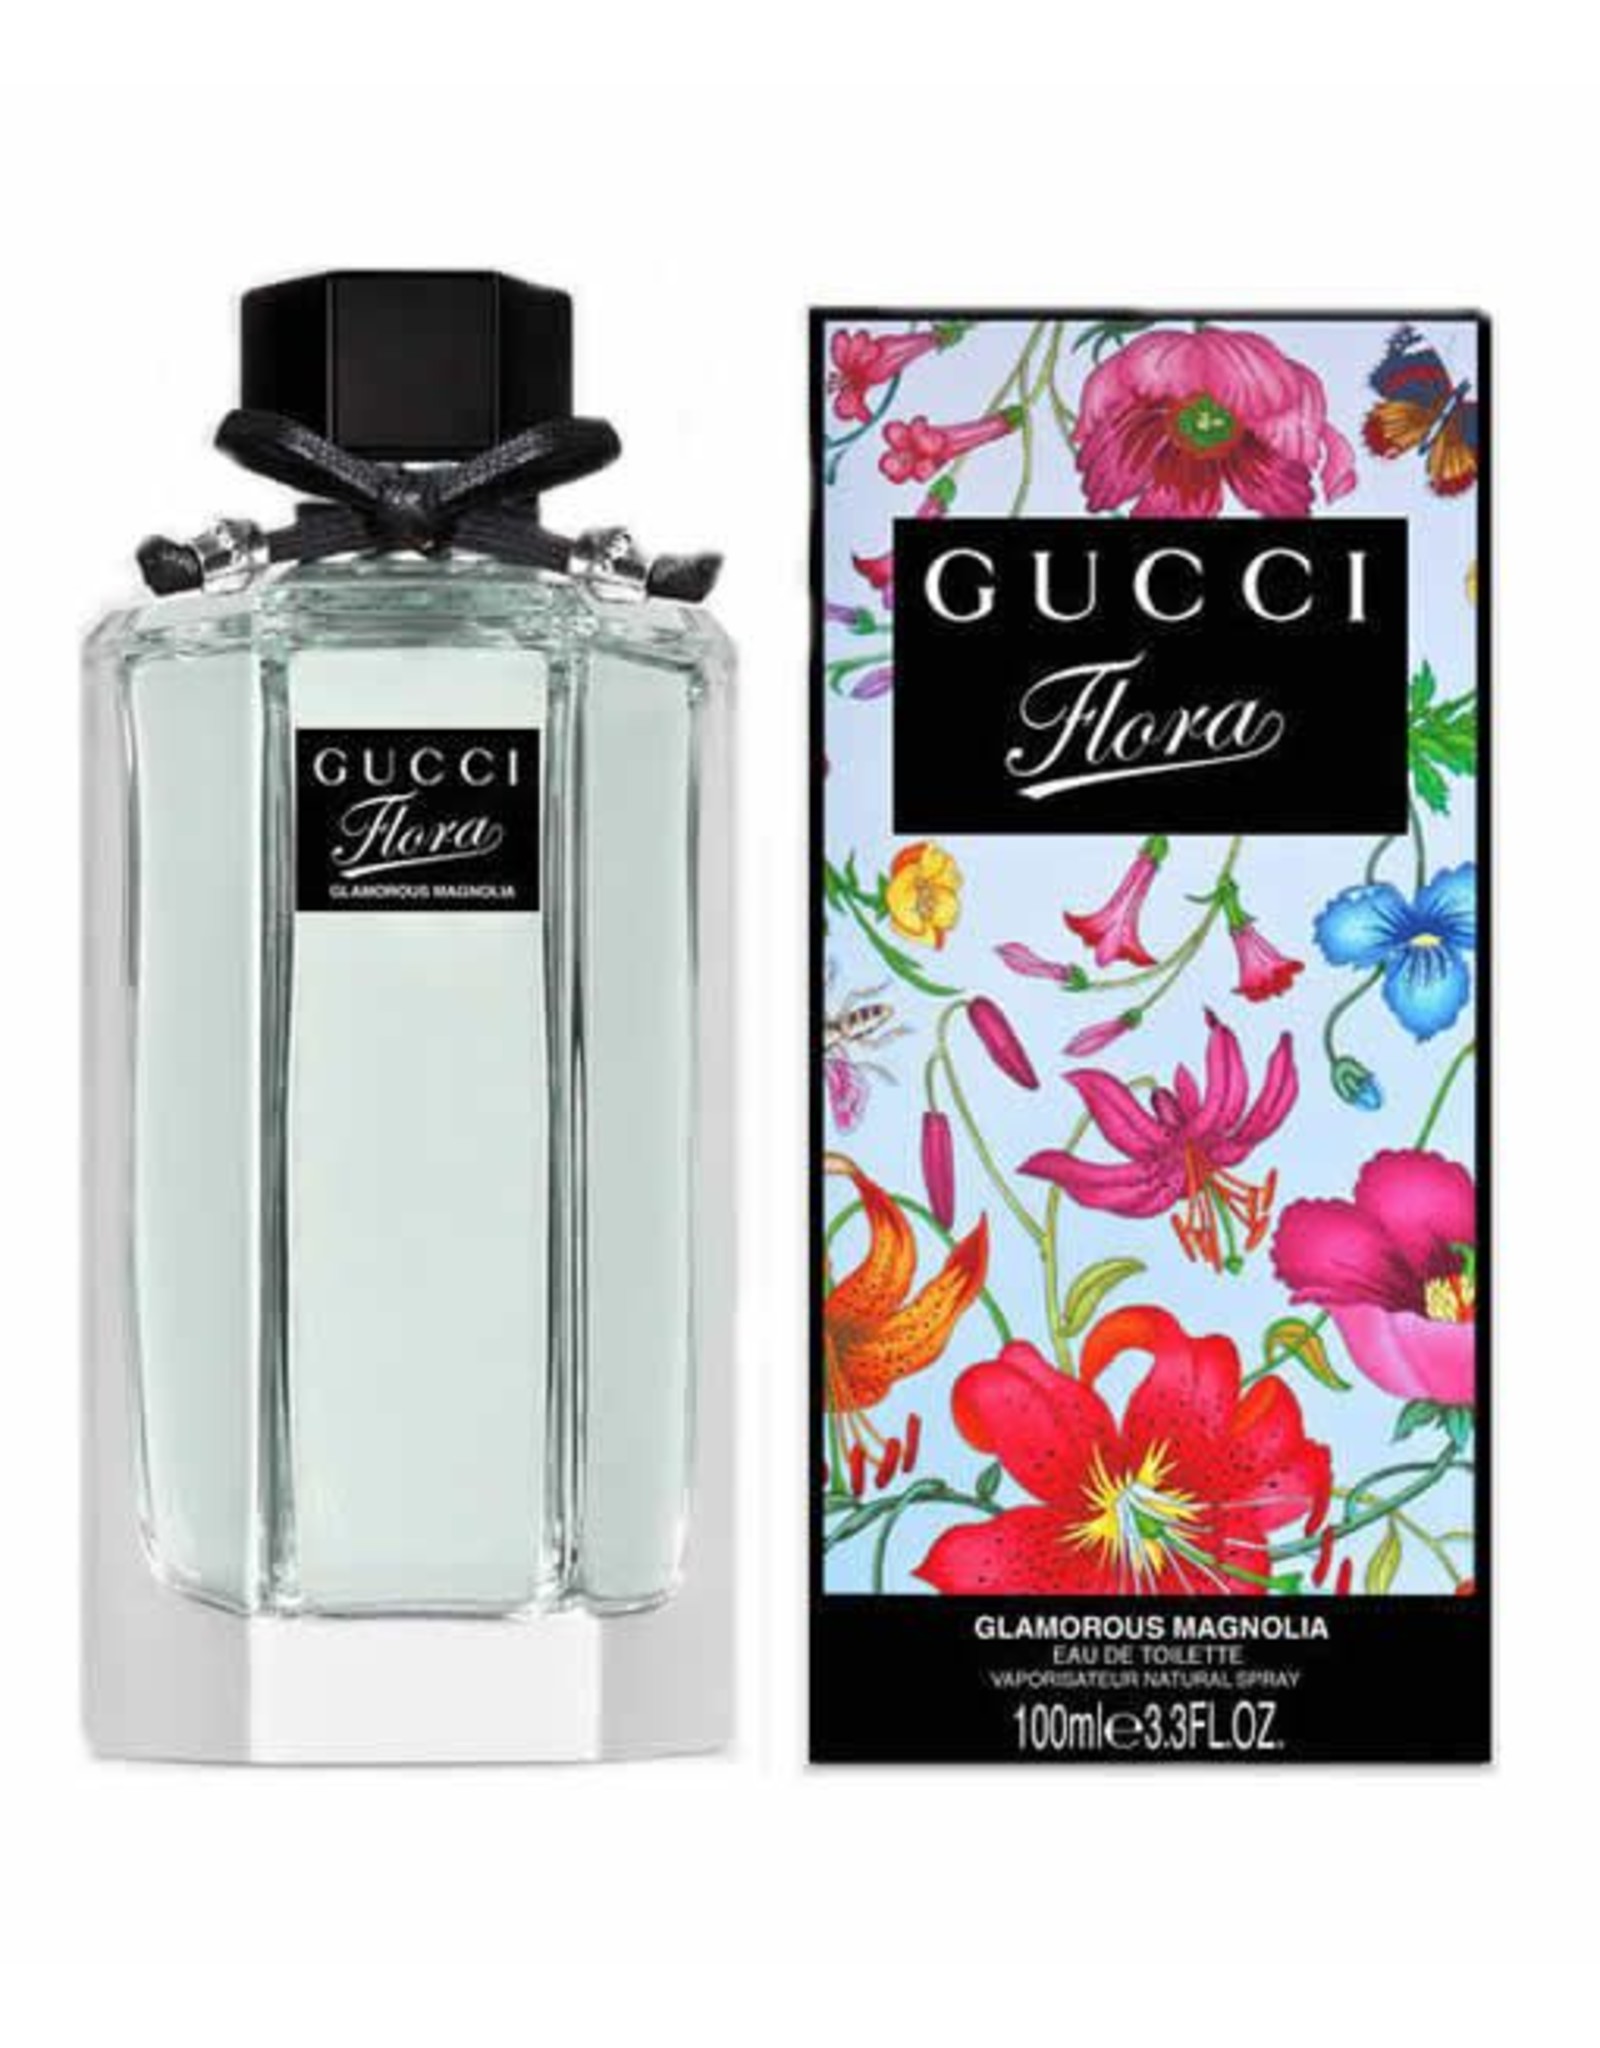 gucci flora glamorous magnolia perfume